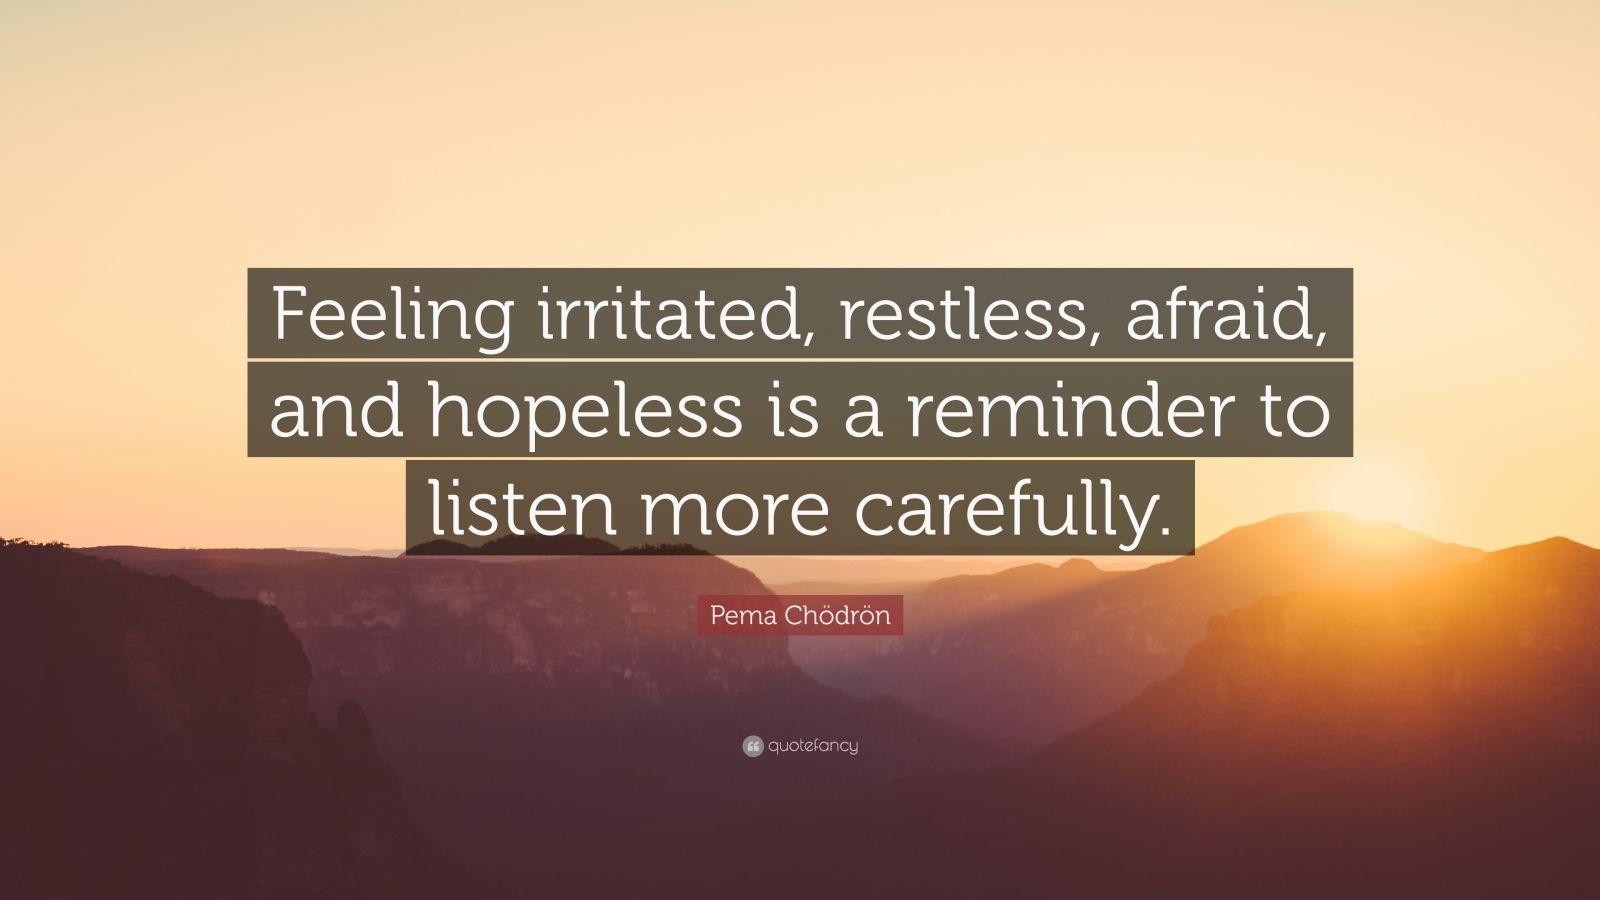 Pema Chödrön Quote: “Feeling irritated, restless, afraid, and hopeless ...